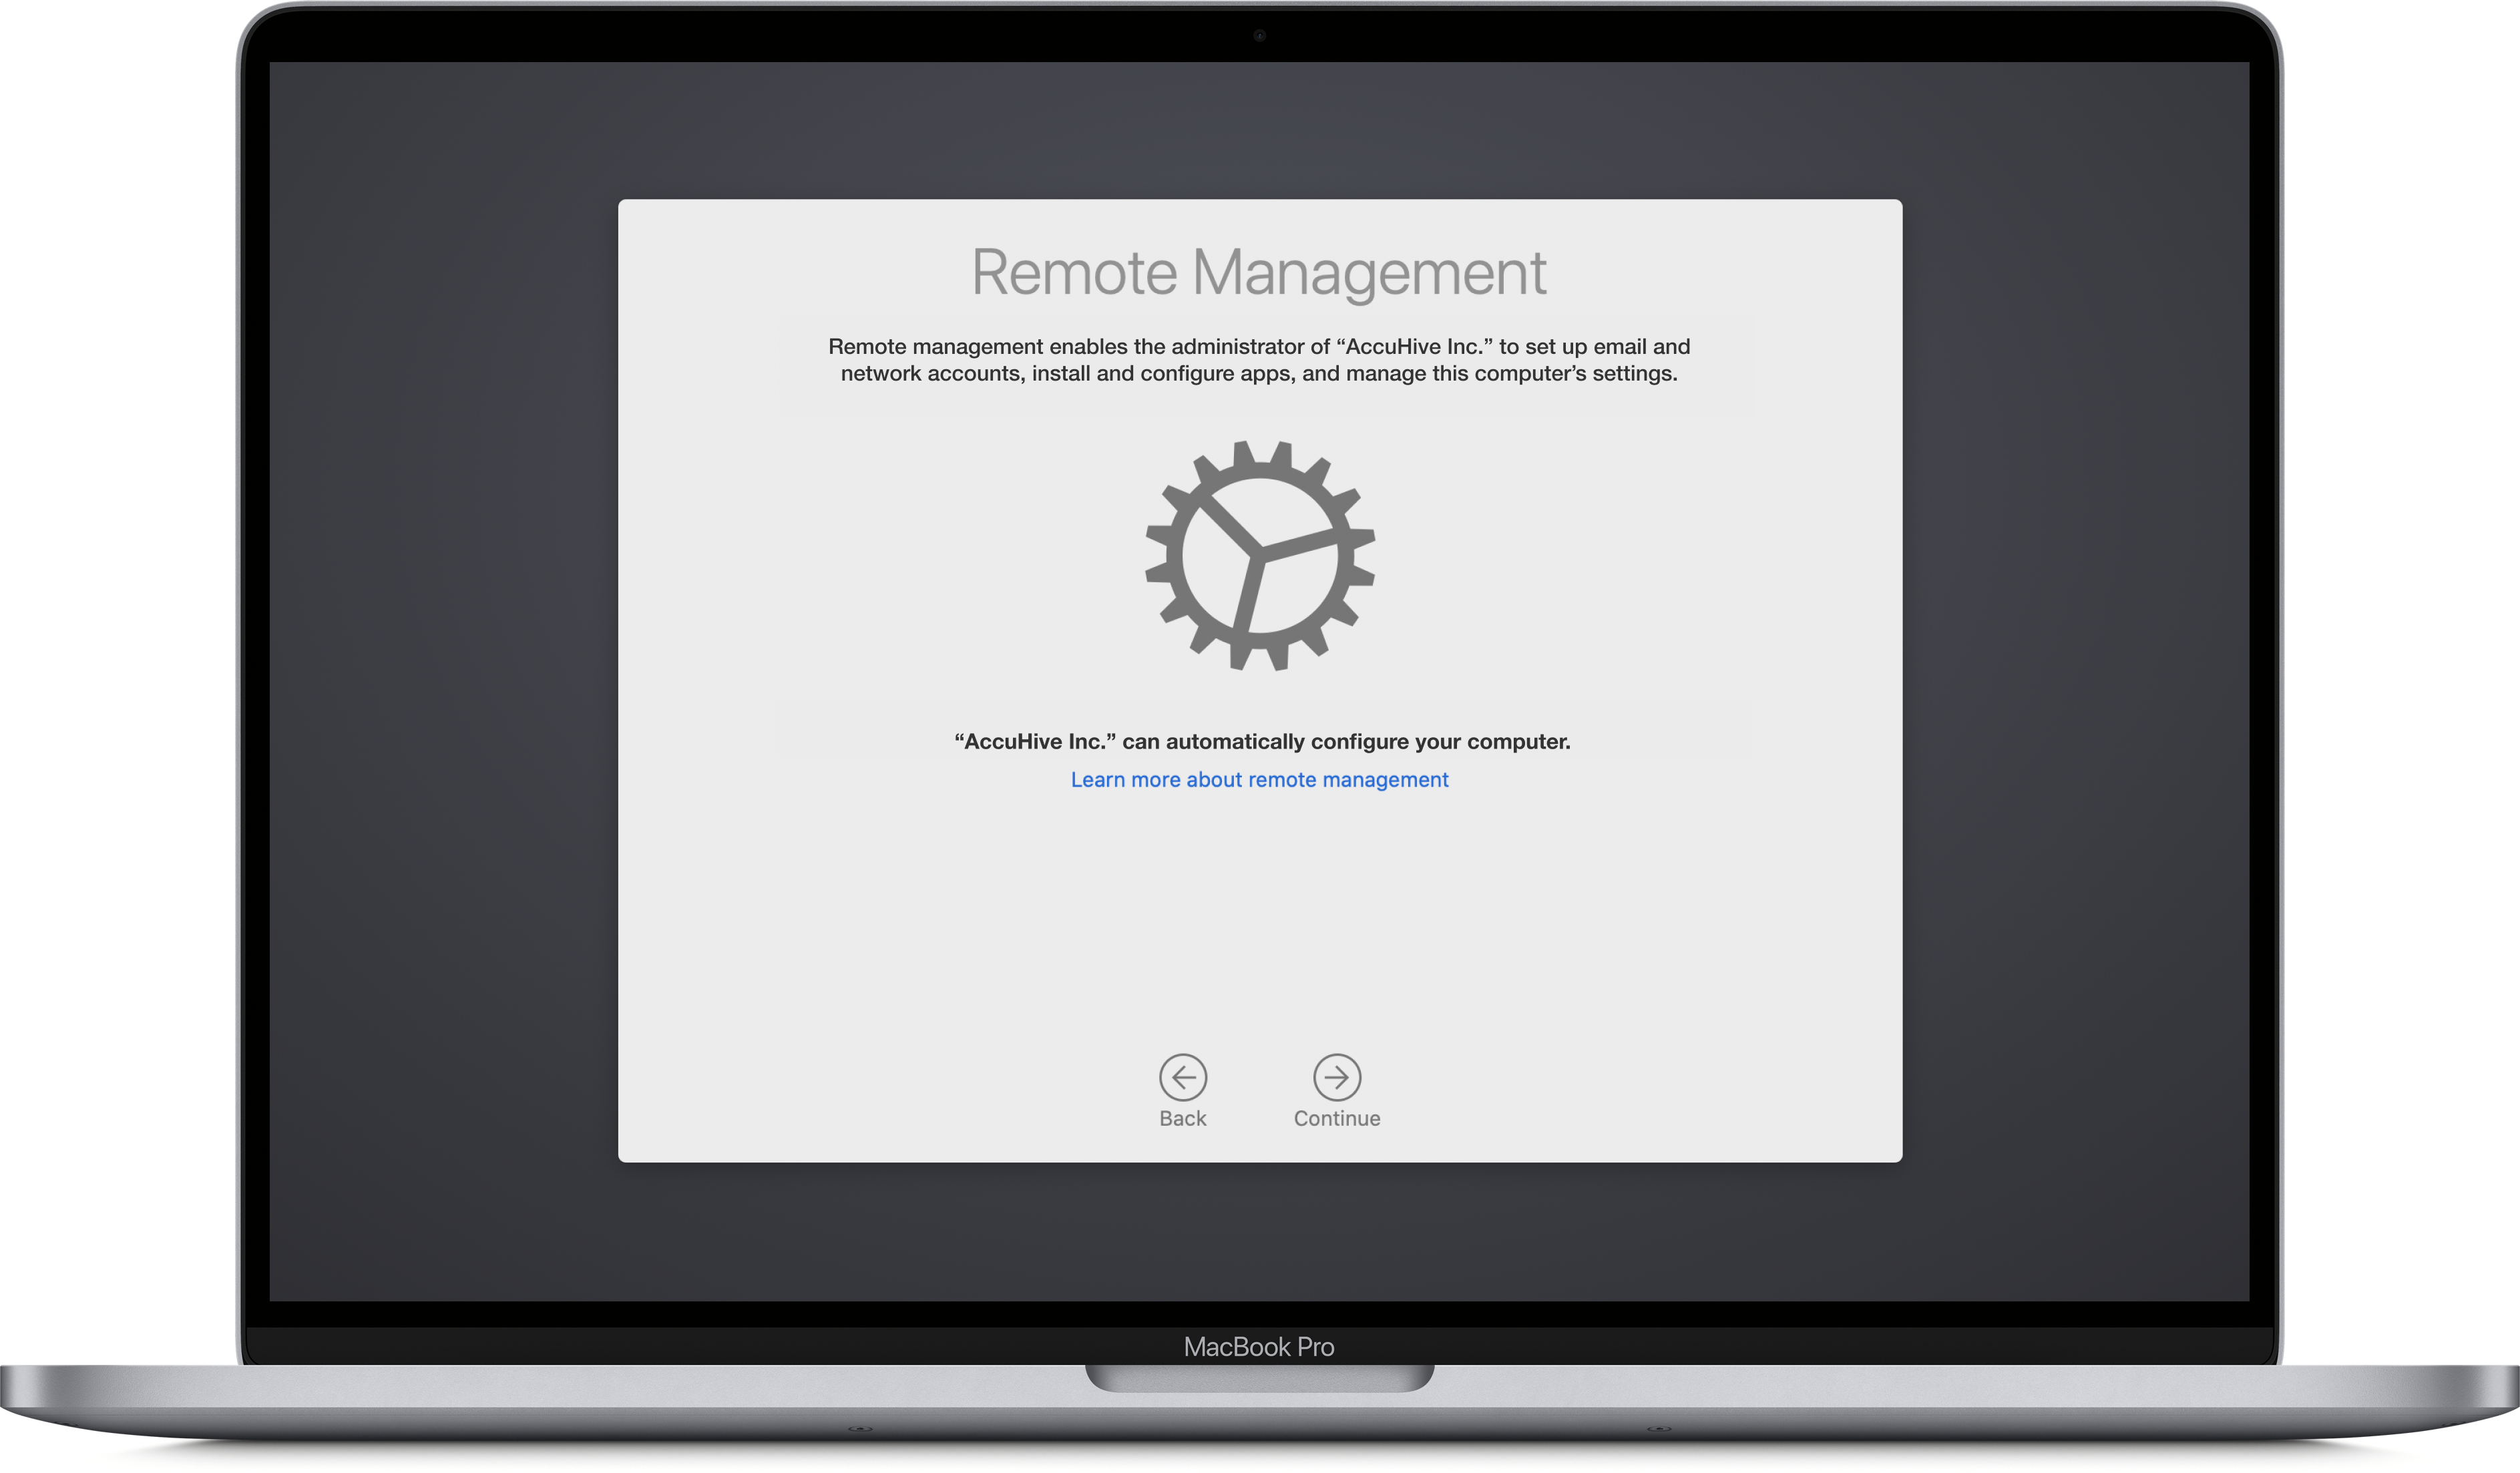 apple remote management